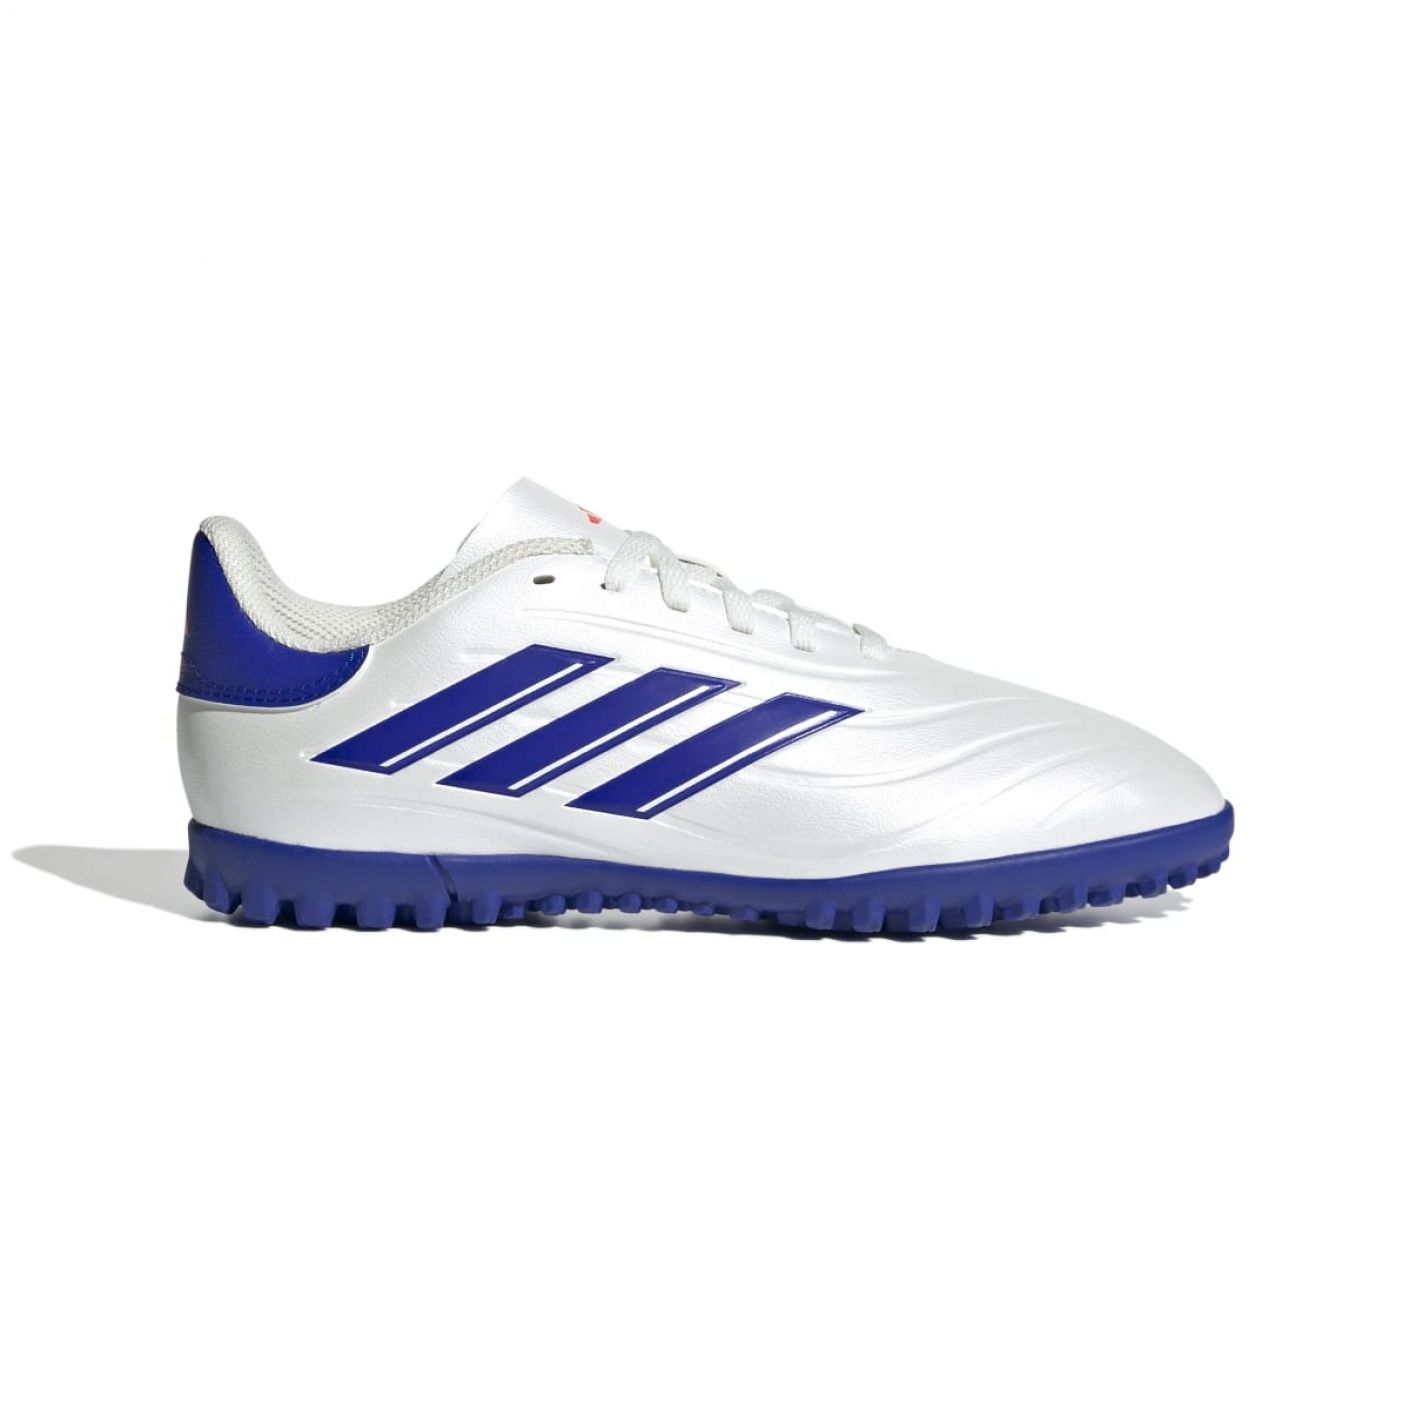 Adidas Copa Pure Ii Club Football Boots Turf Ftwwht/Lucblu/Solred